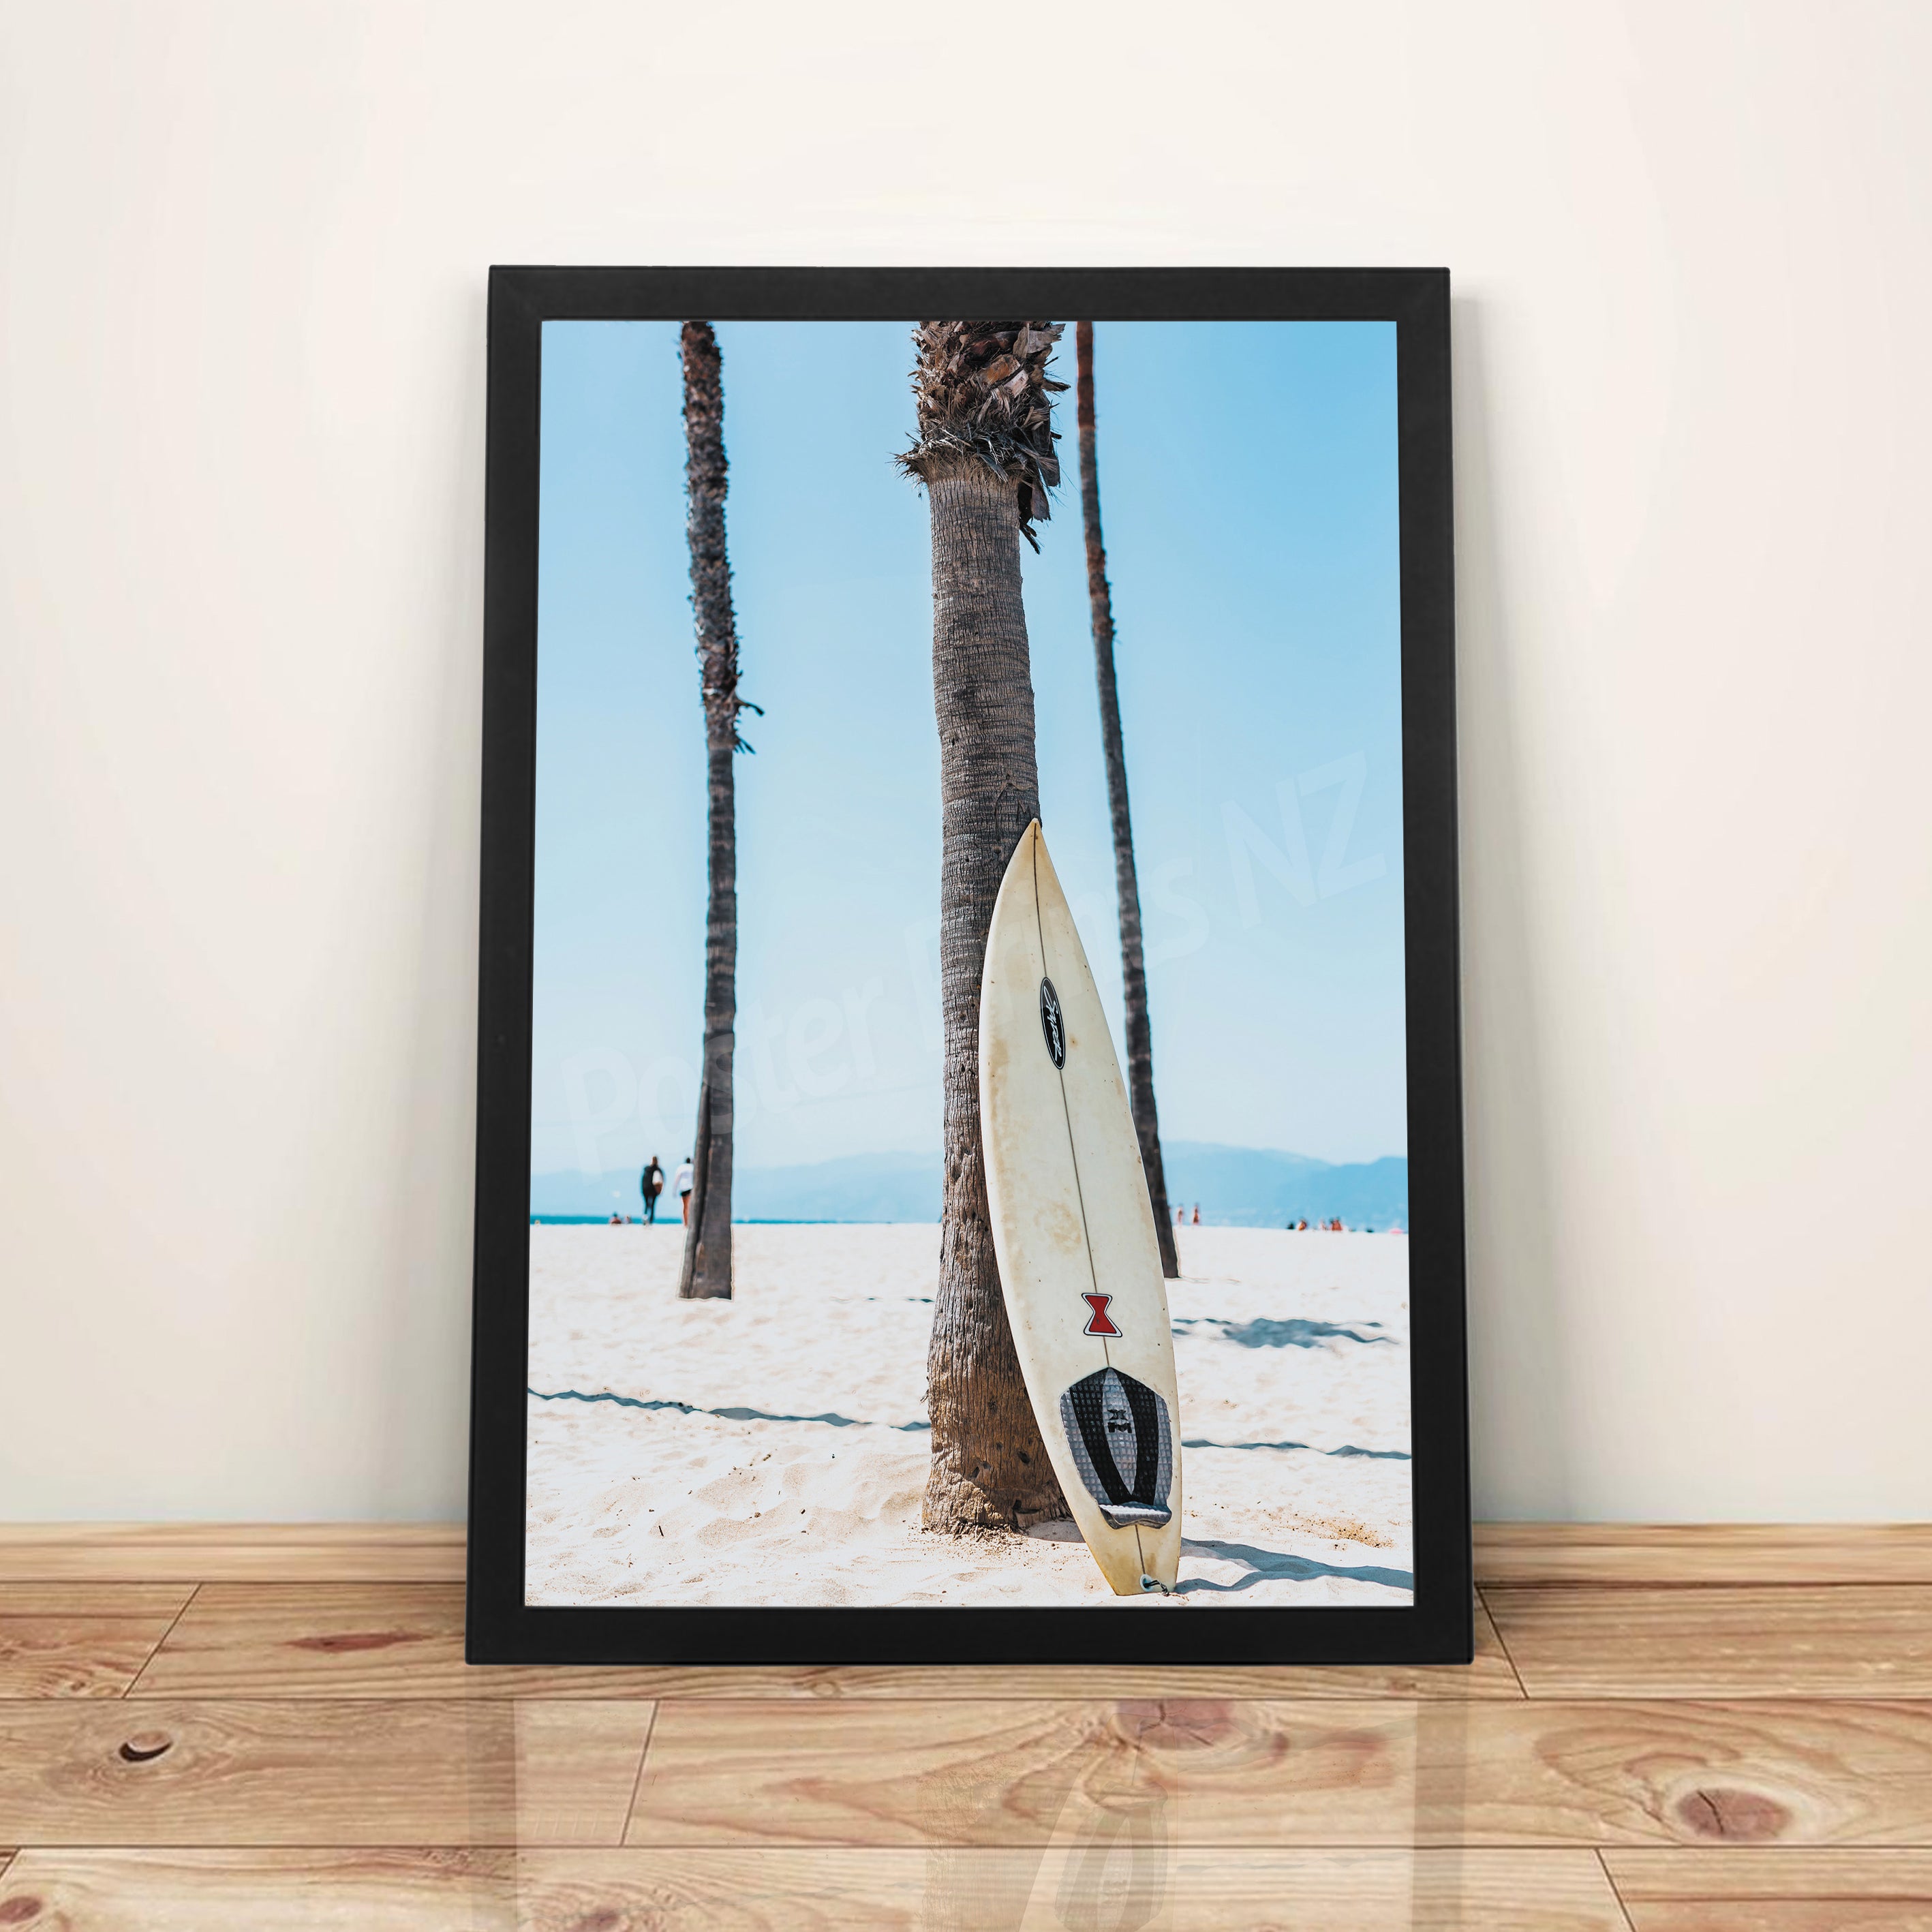 Surfing The Palm - A3 Framed Digital Art Poster